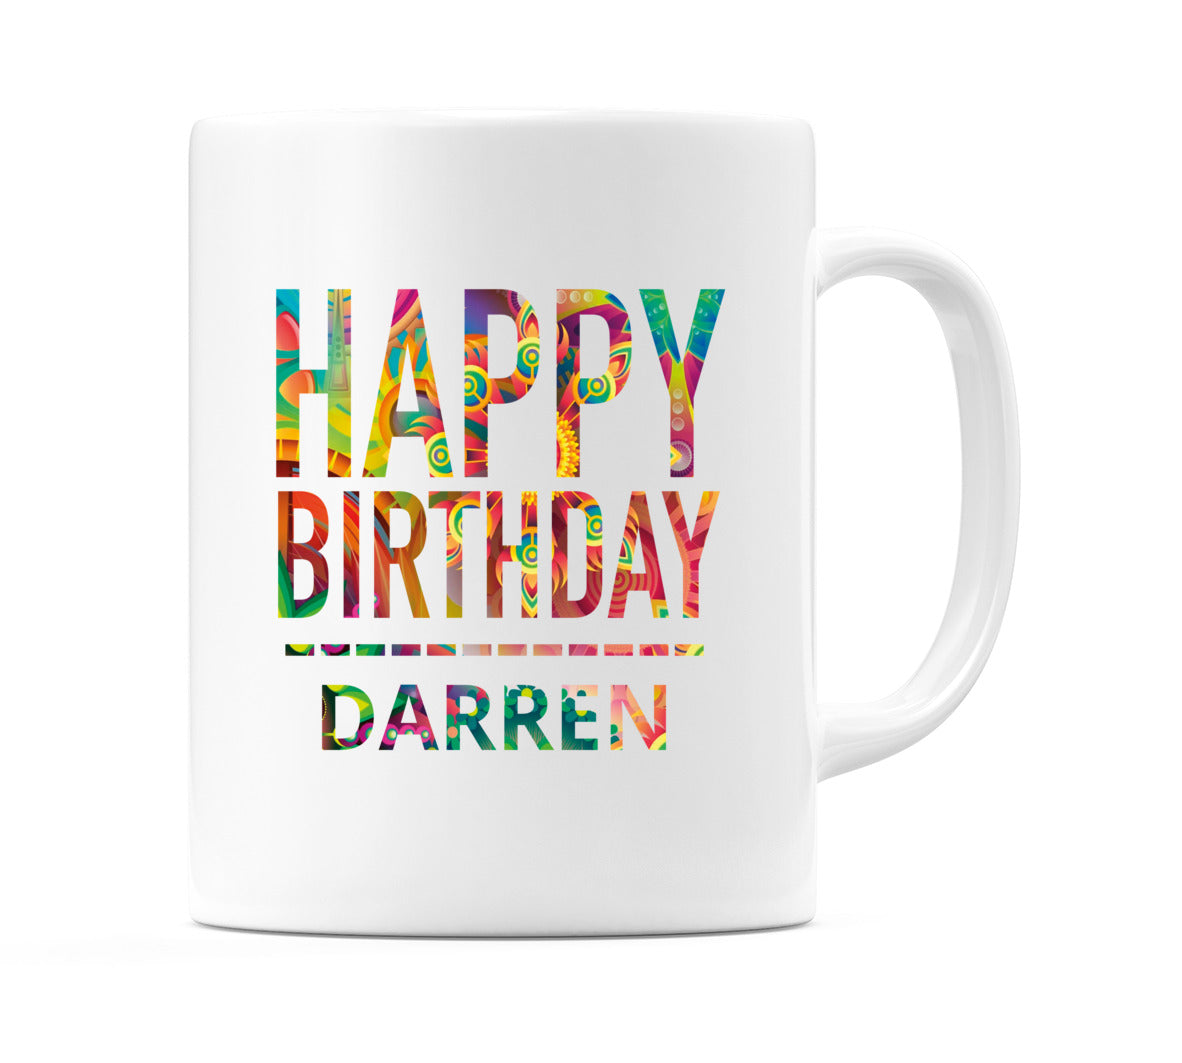 Happy Birthday Darren (Tie Dye Effect) Mug Cup by WeDoMugs